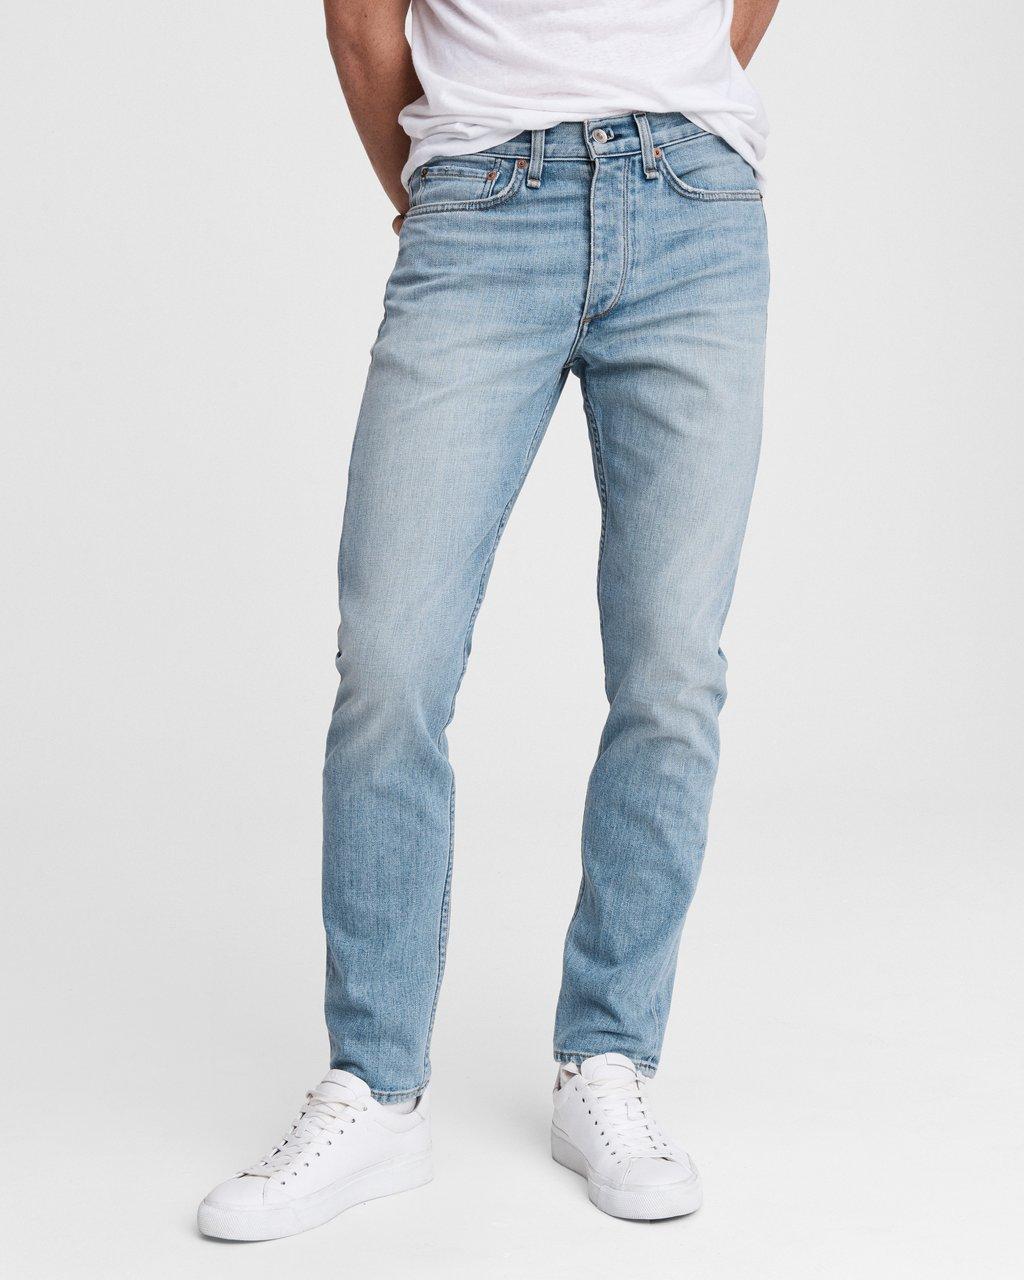 Fit 2 Jeans